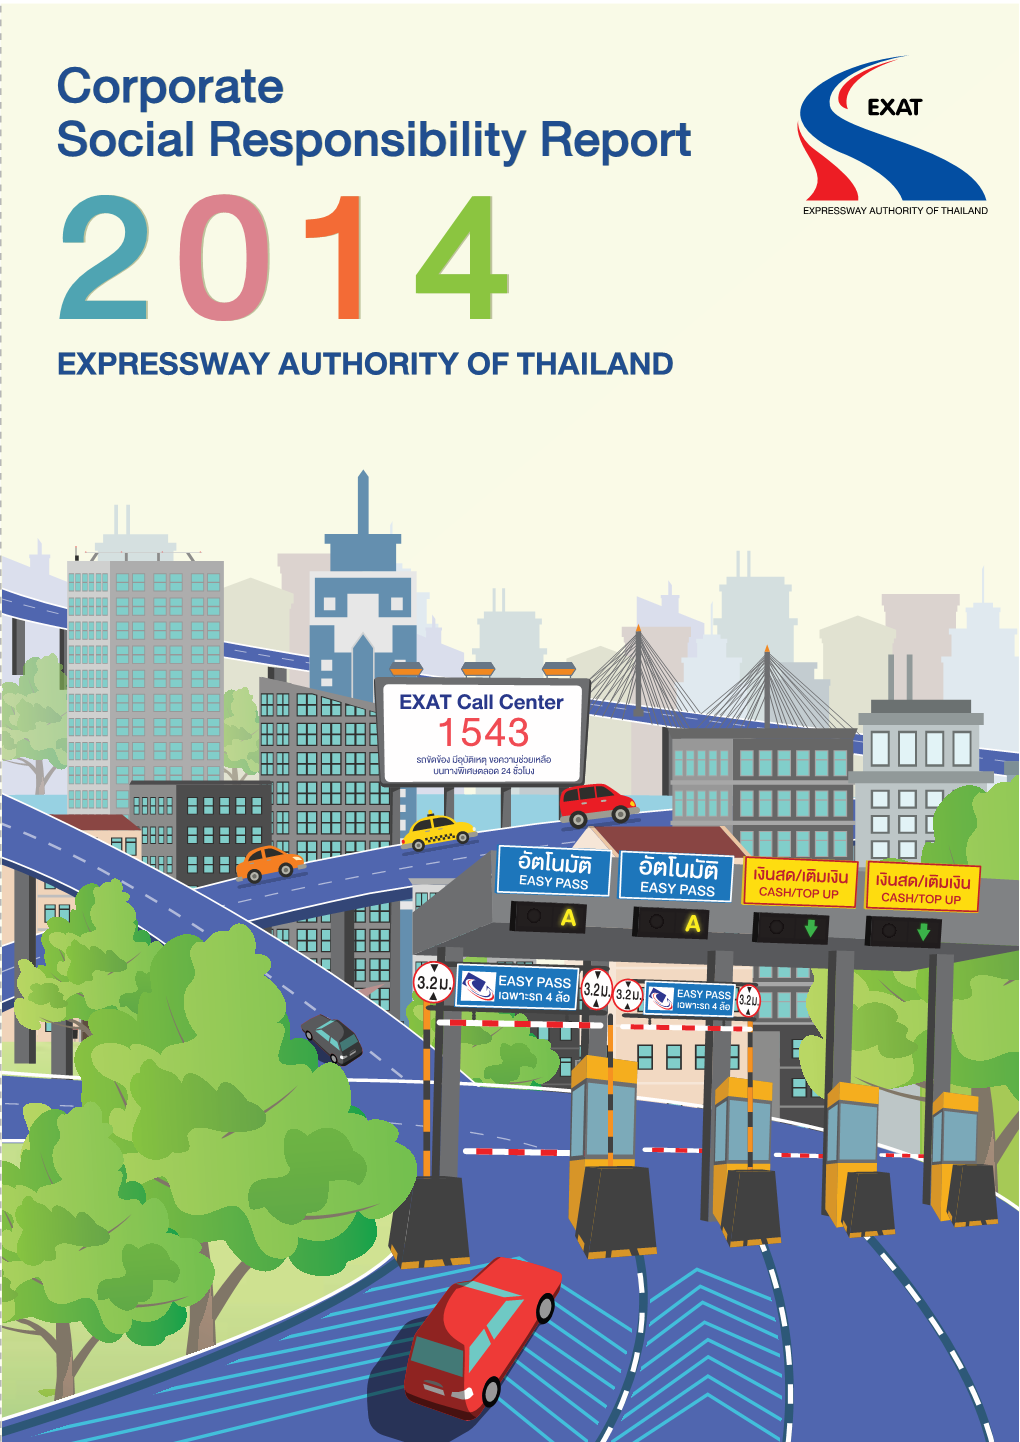 Expressway Authority of Thailand